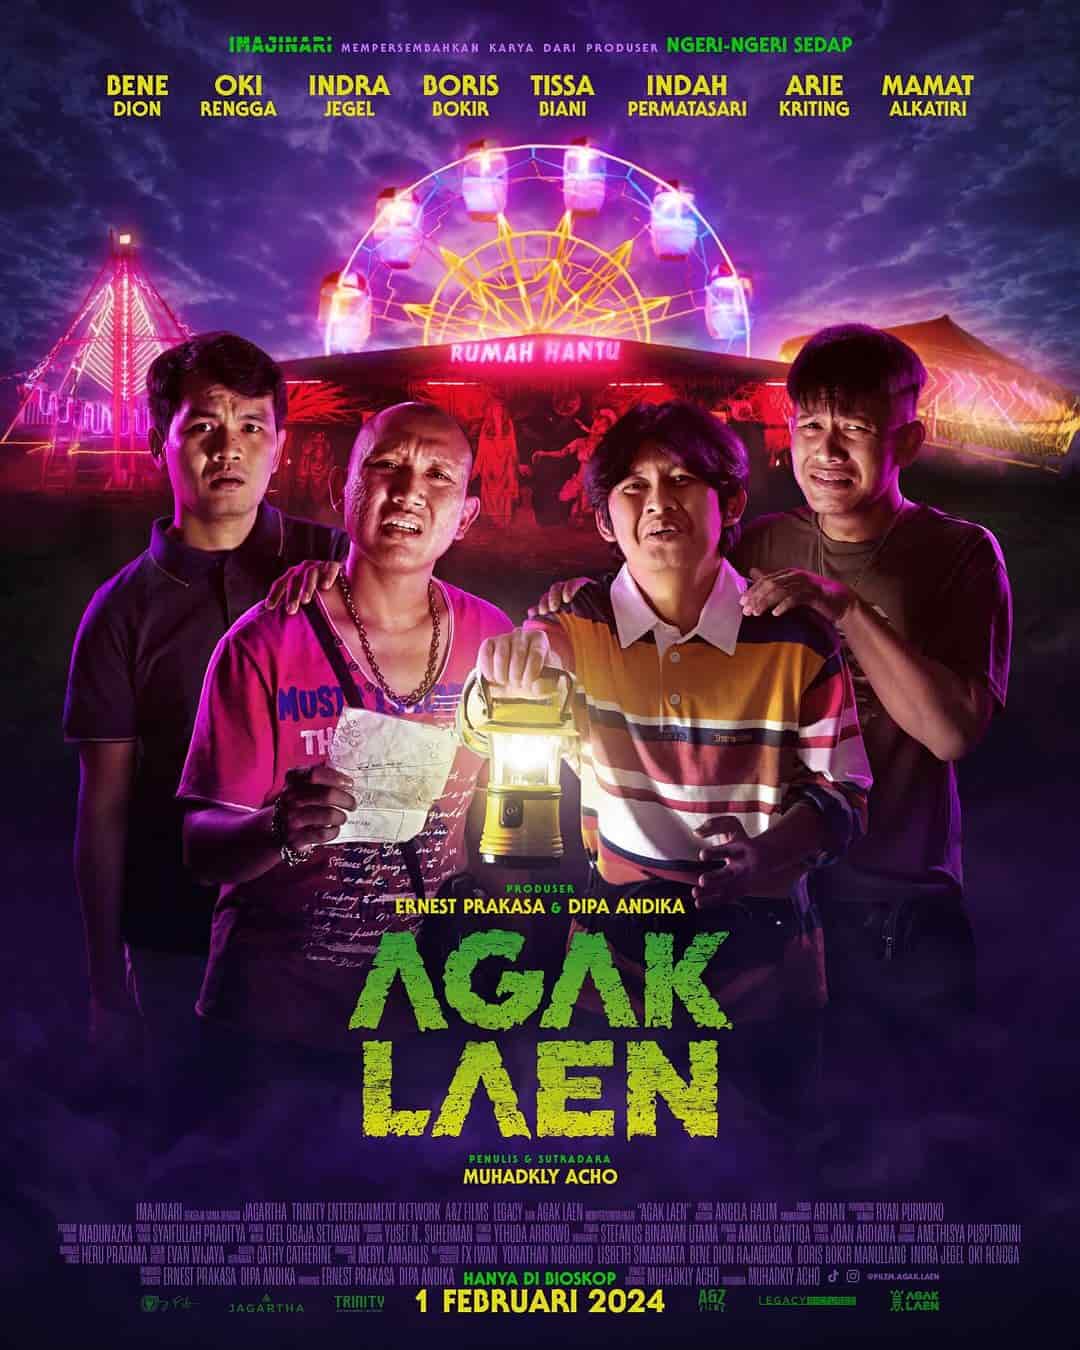 Agak Laen - Sinopsis, Pemain, OST, Review